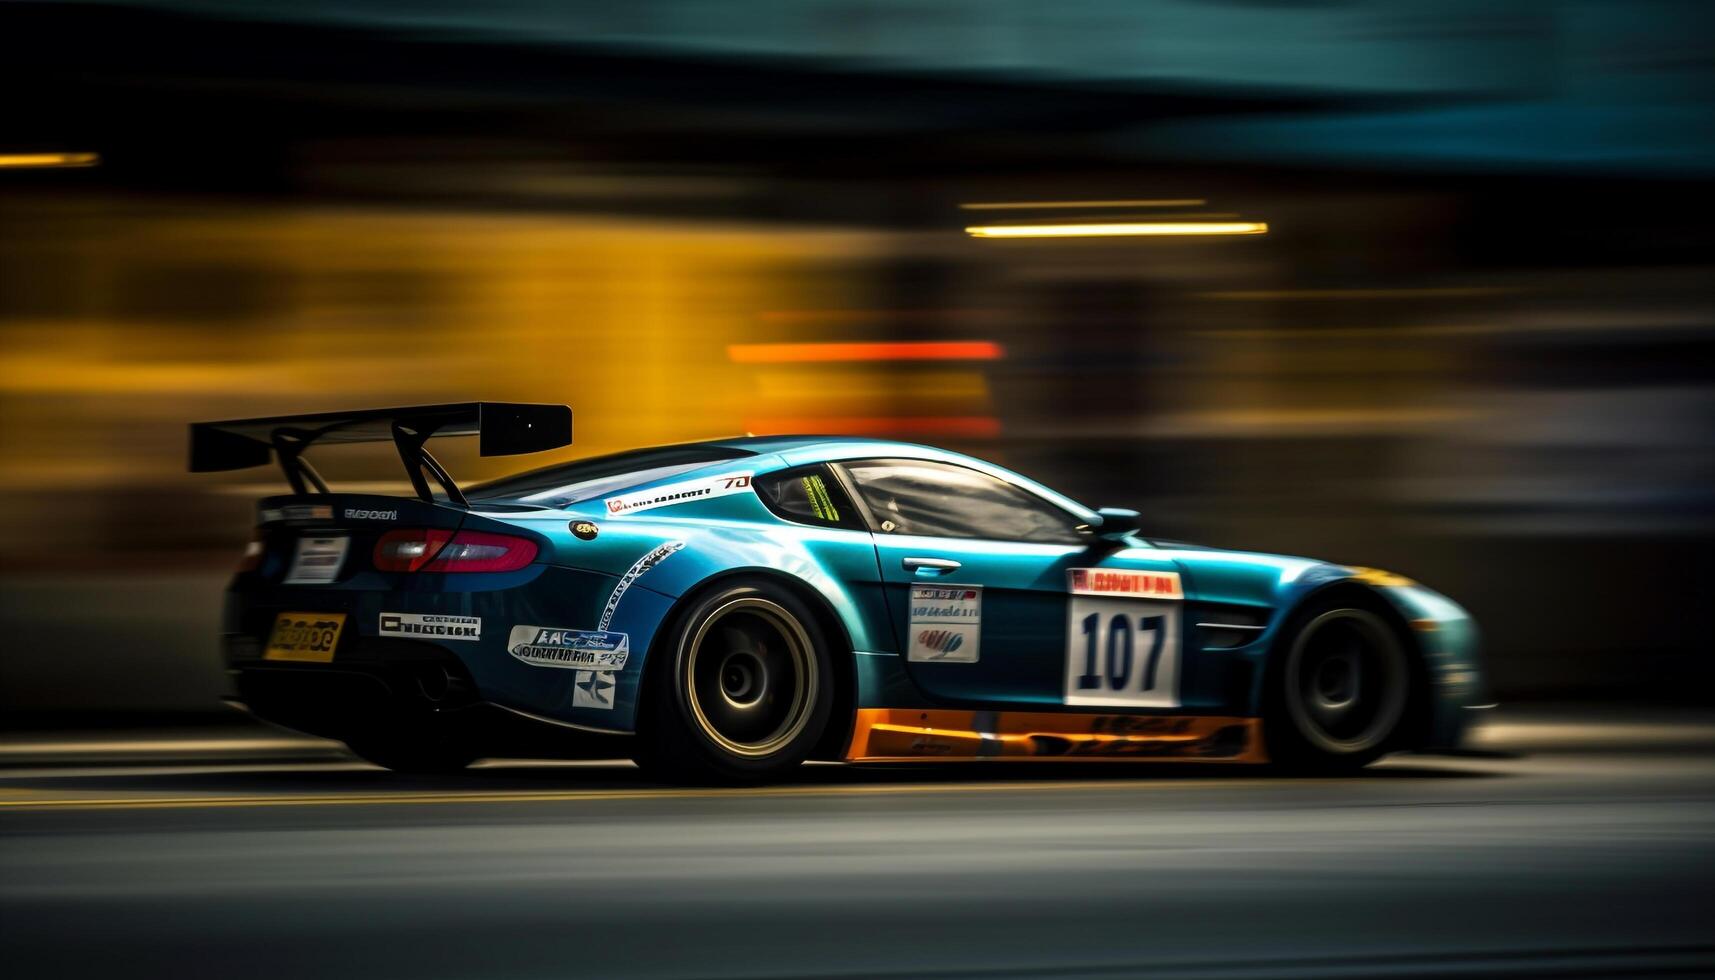 Blurred motion, shiny sports car, illuminated night race photo